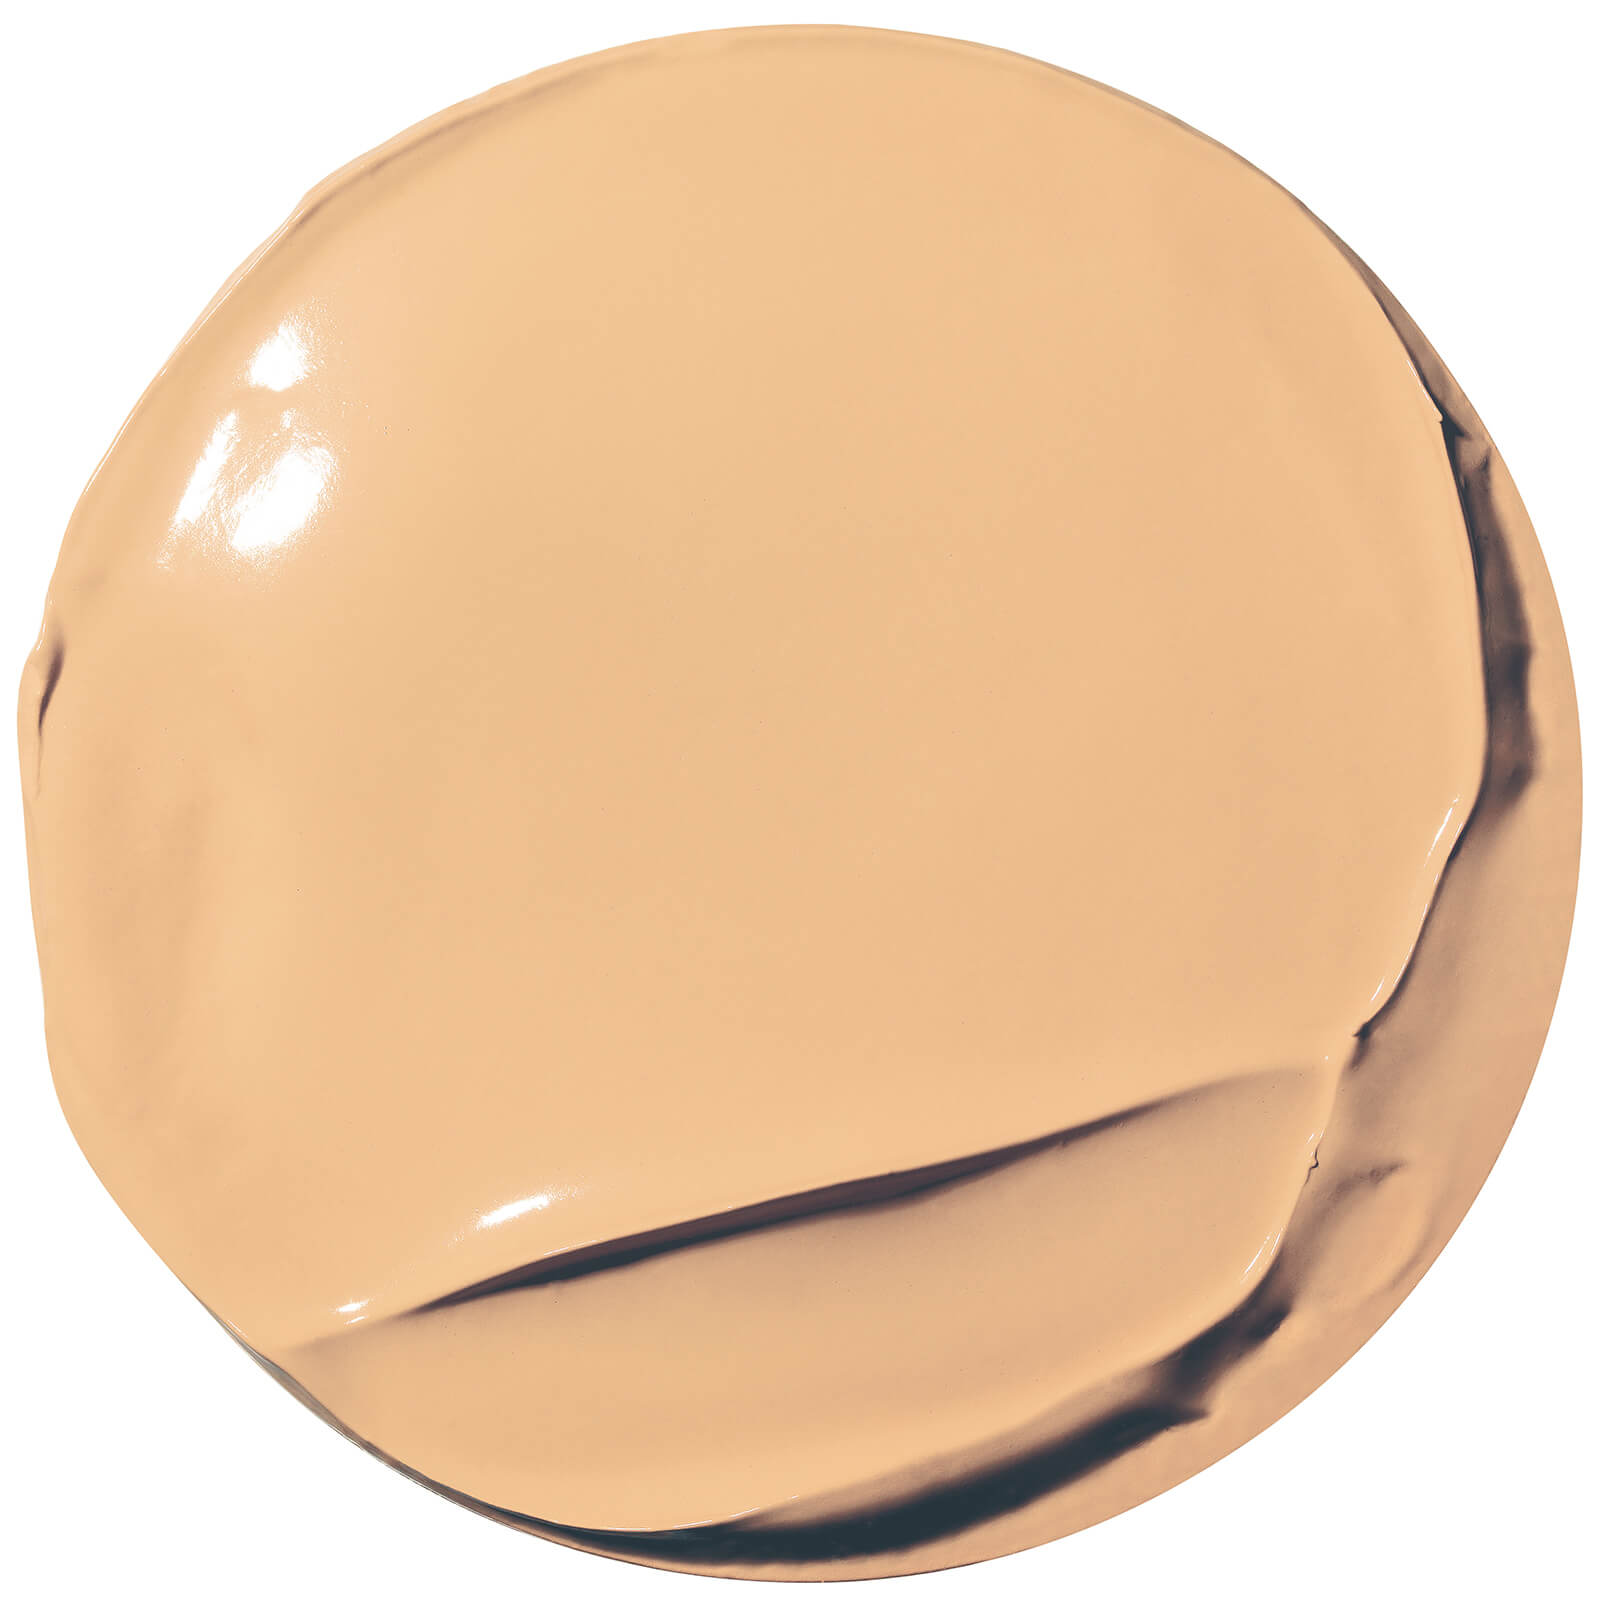 Laura Mercier Silk Crème Oil-Free Foundation 30ml (Various Shades) - Cream Ivory